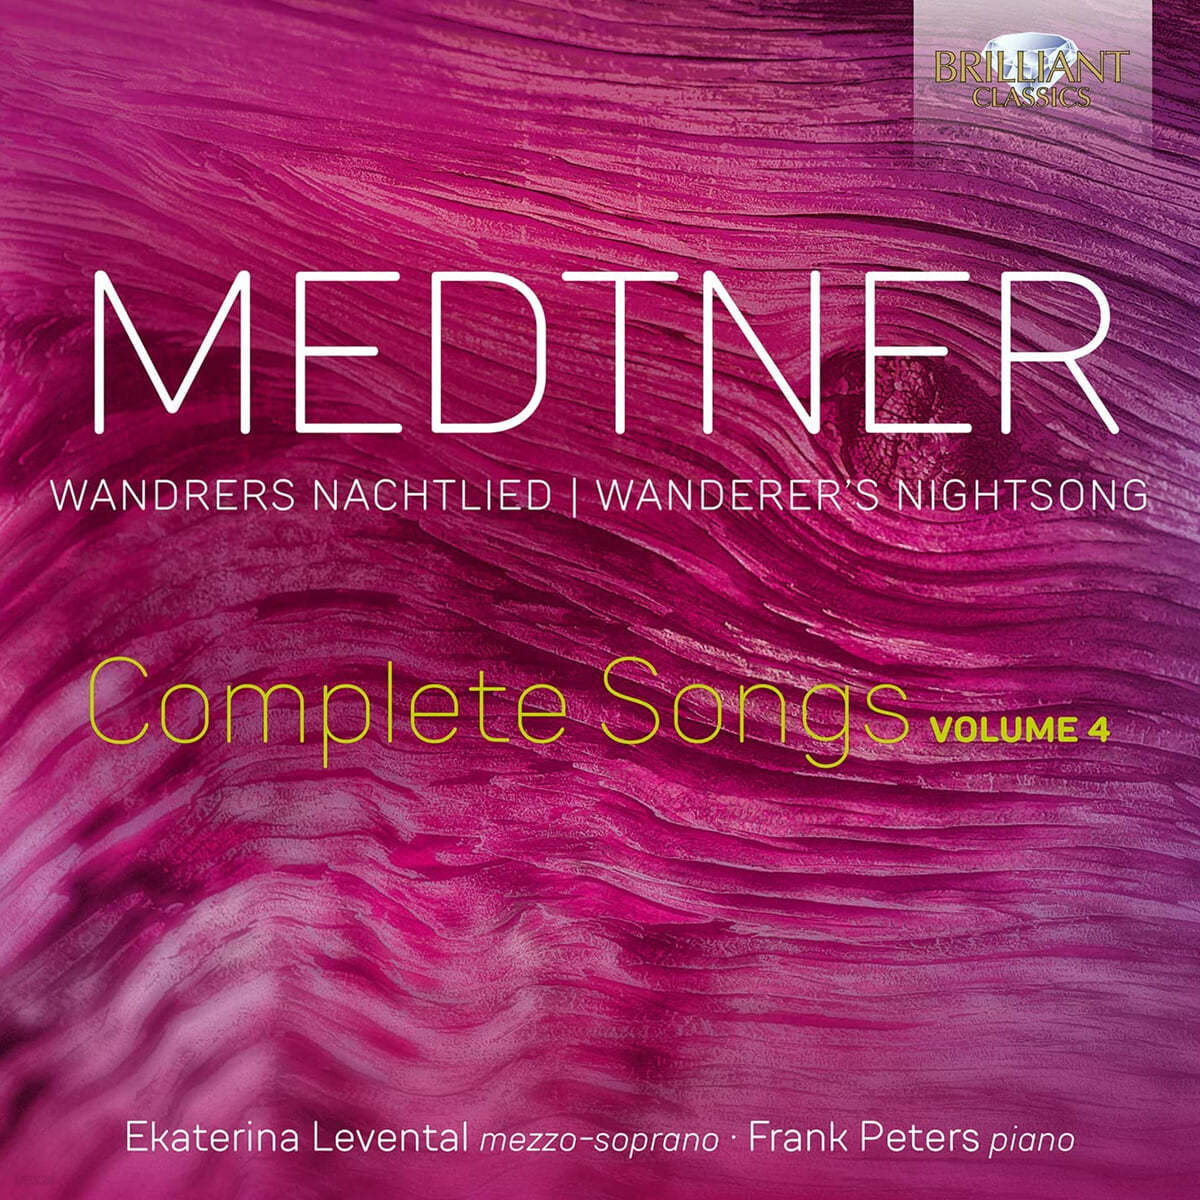 Ekaterina Levental 메트너: 가곡 전곡 4집 - 방랑자의 밤의 노래 (Medtner: Wandrers Nachtlied, Complete Songs, Vol. 4)